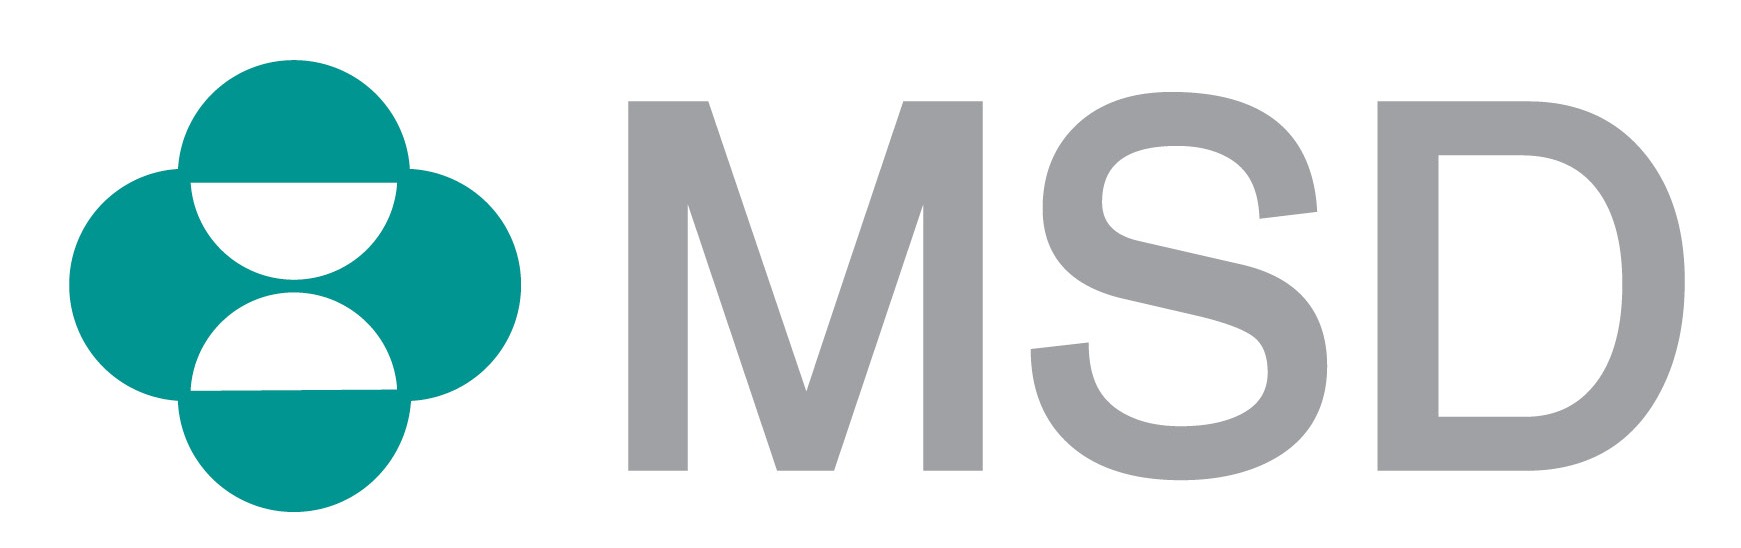 MSD logo.jpg